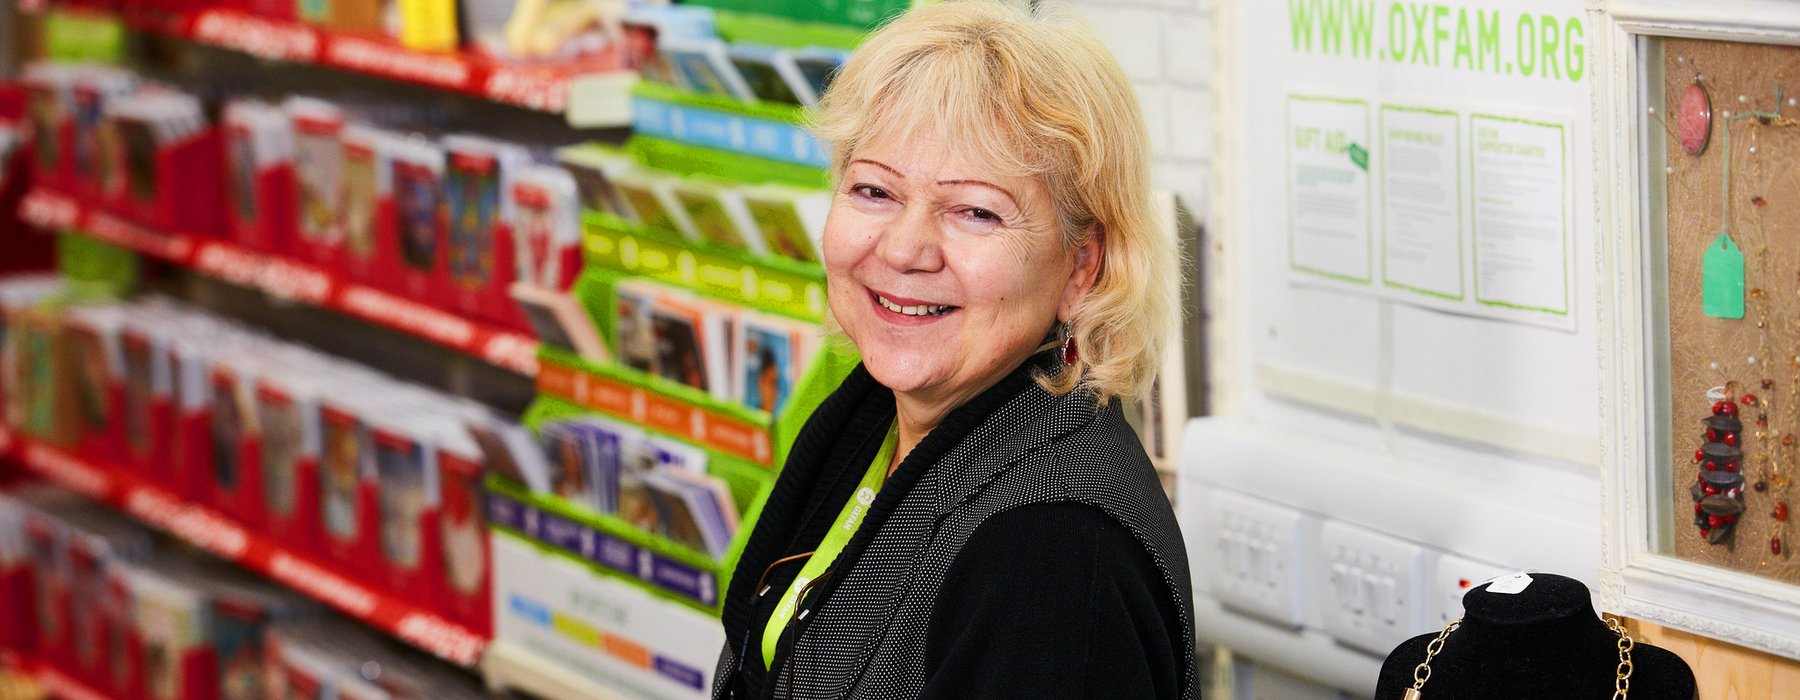 Vanessa, regular volunteer at the Pimlico Oxfam shop